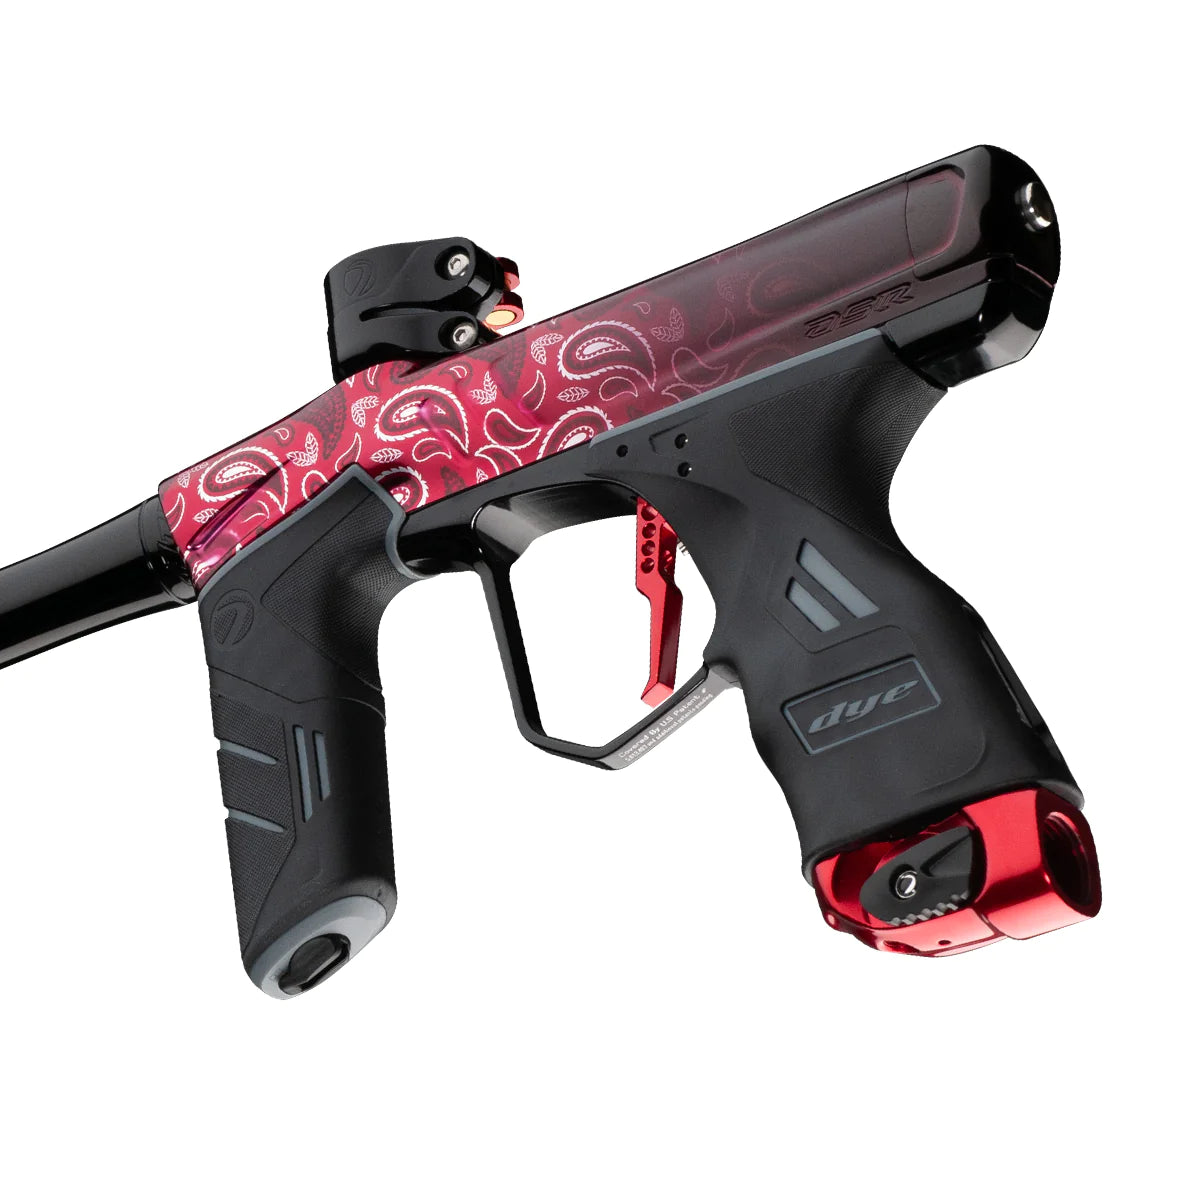 Dye DSR+ Paintball Gun - Bandana Red